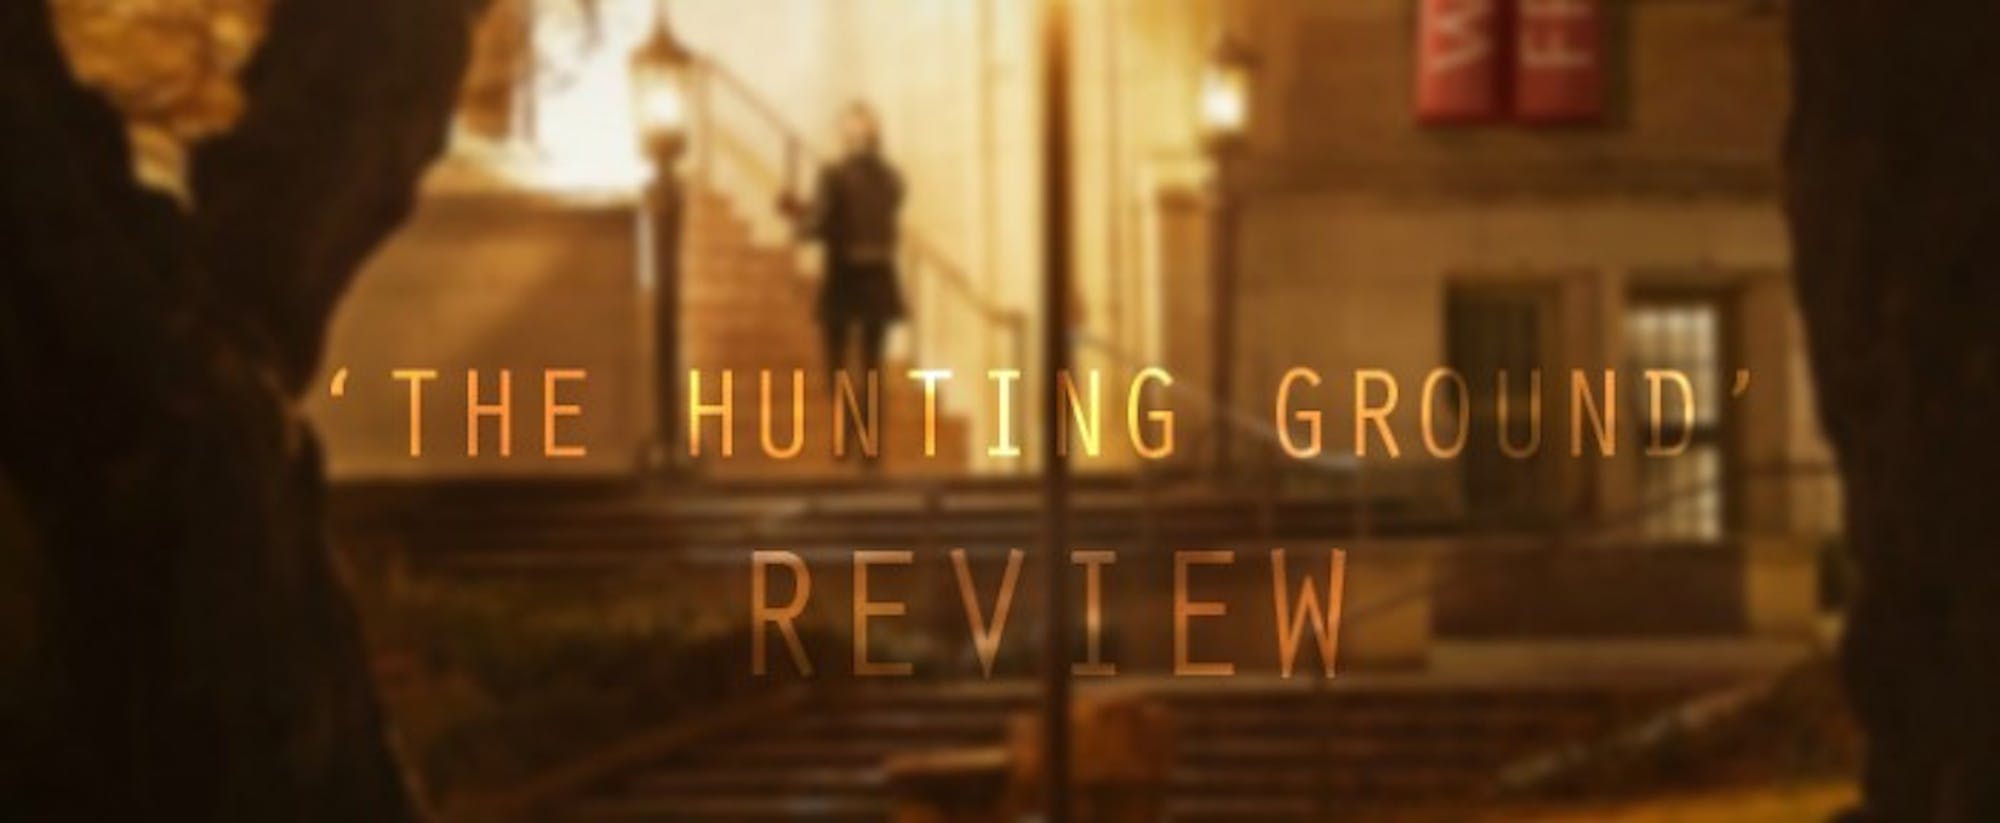 hunting-ground-graphic-WEB